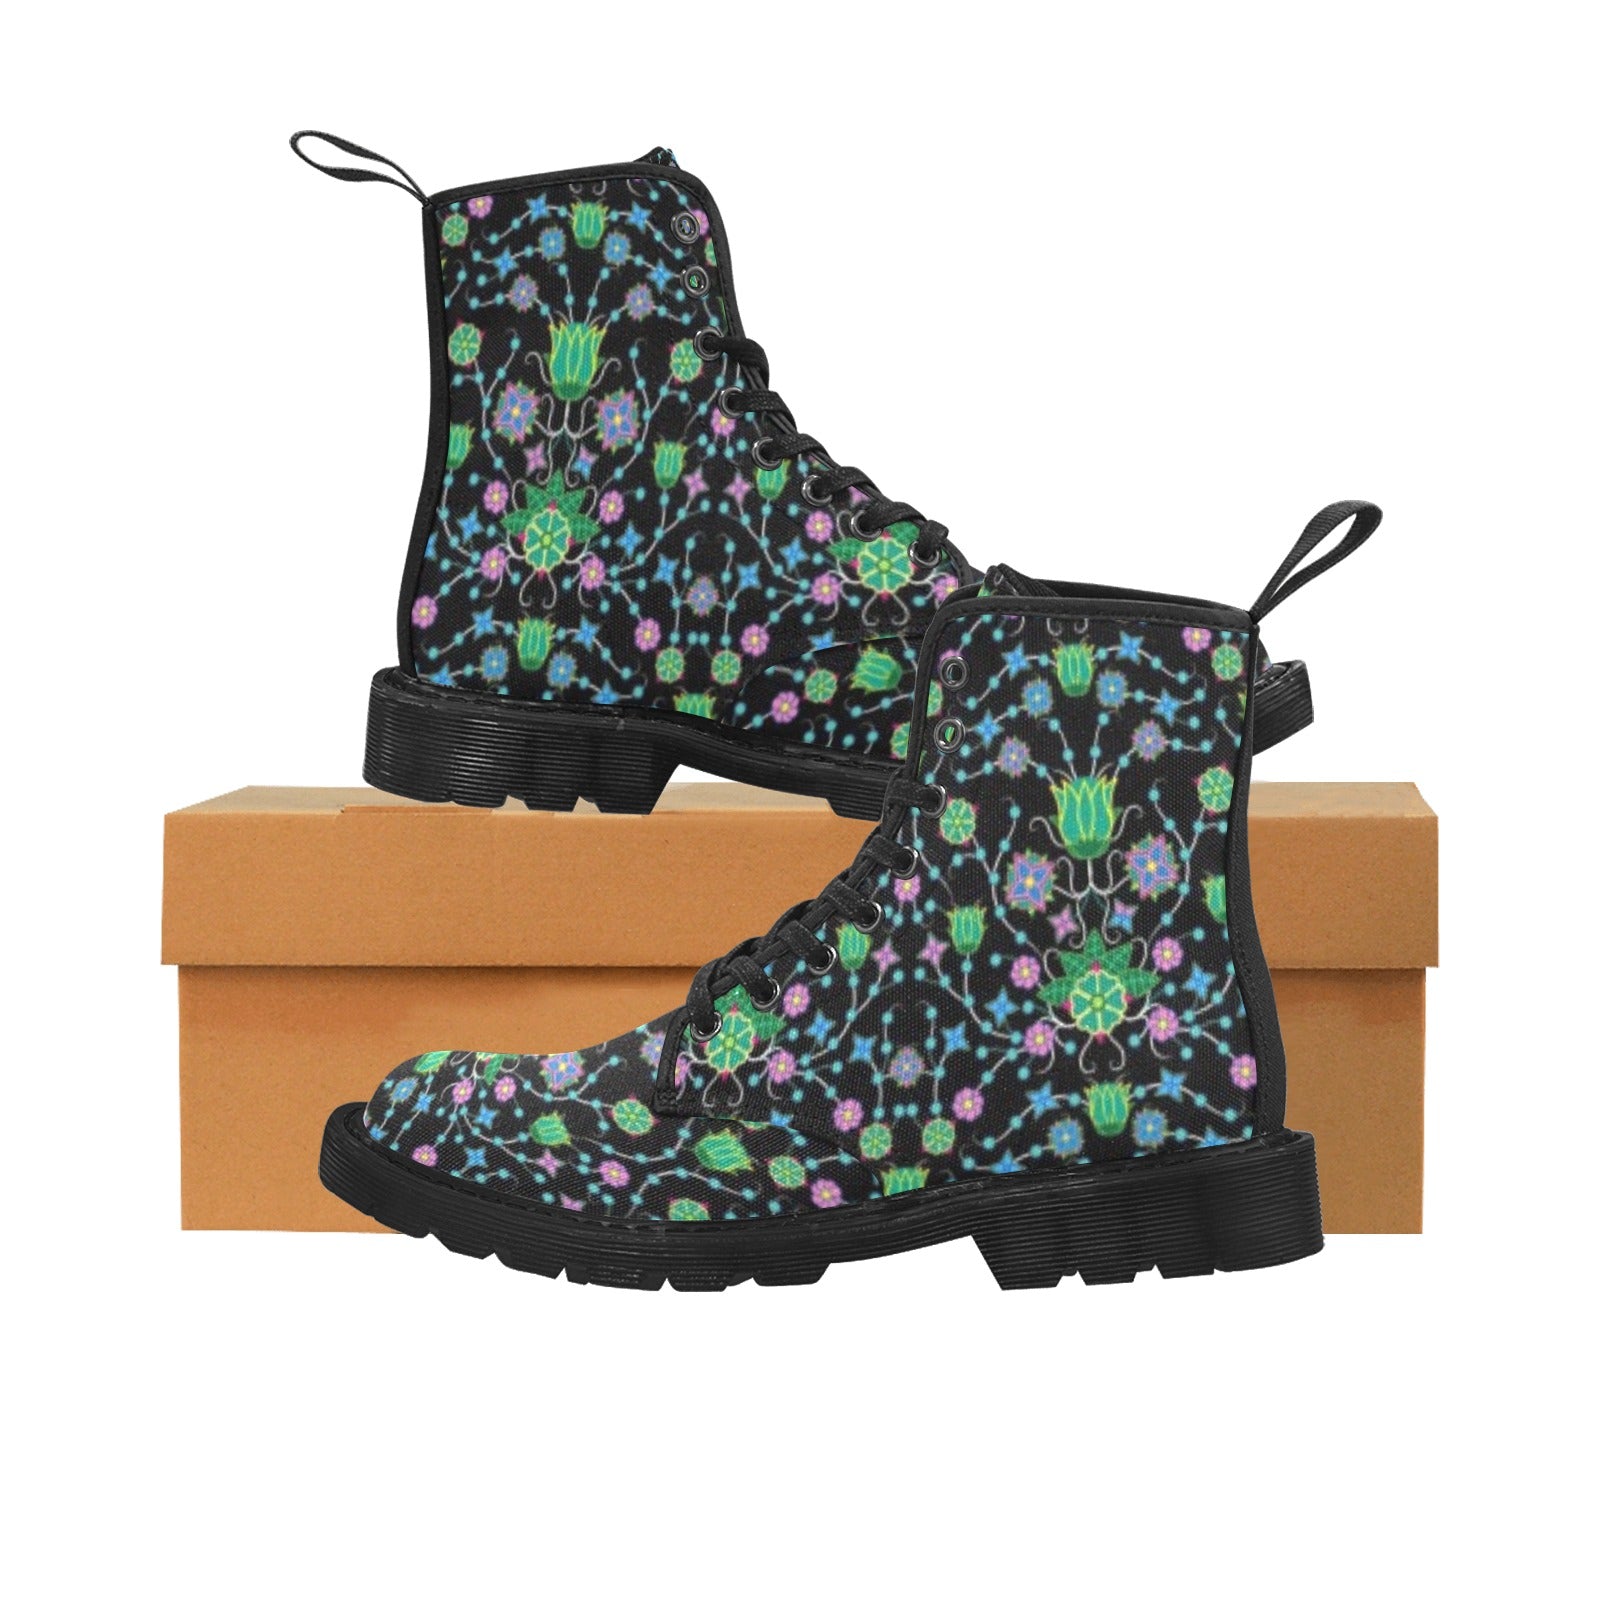 Floral Damask Garden Boots for Women (Black)